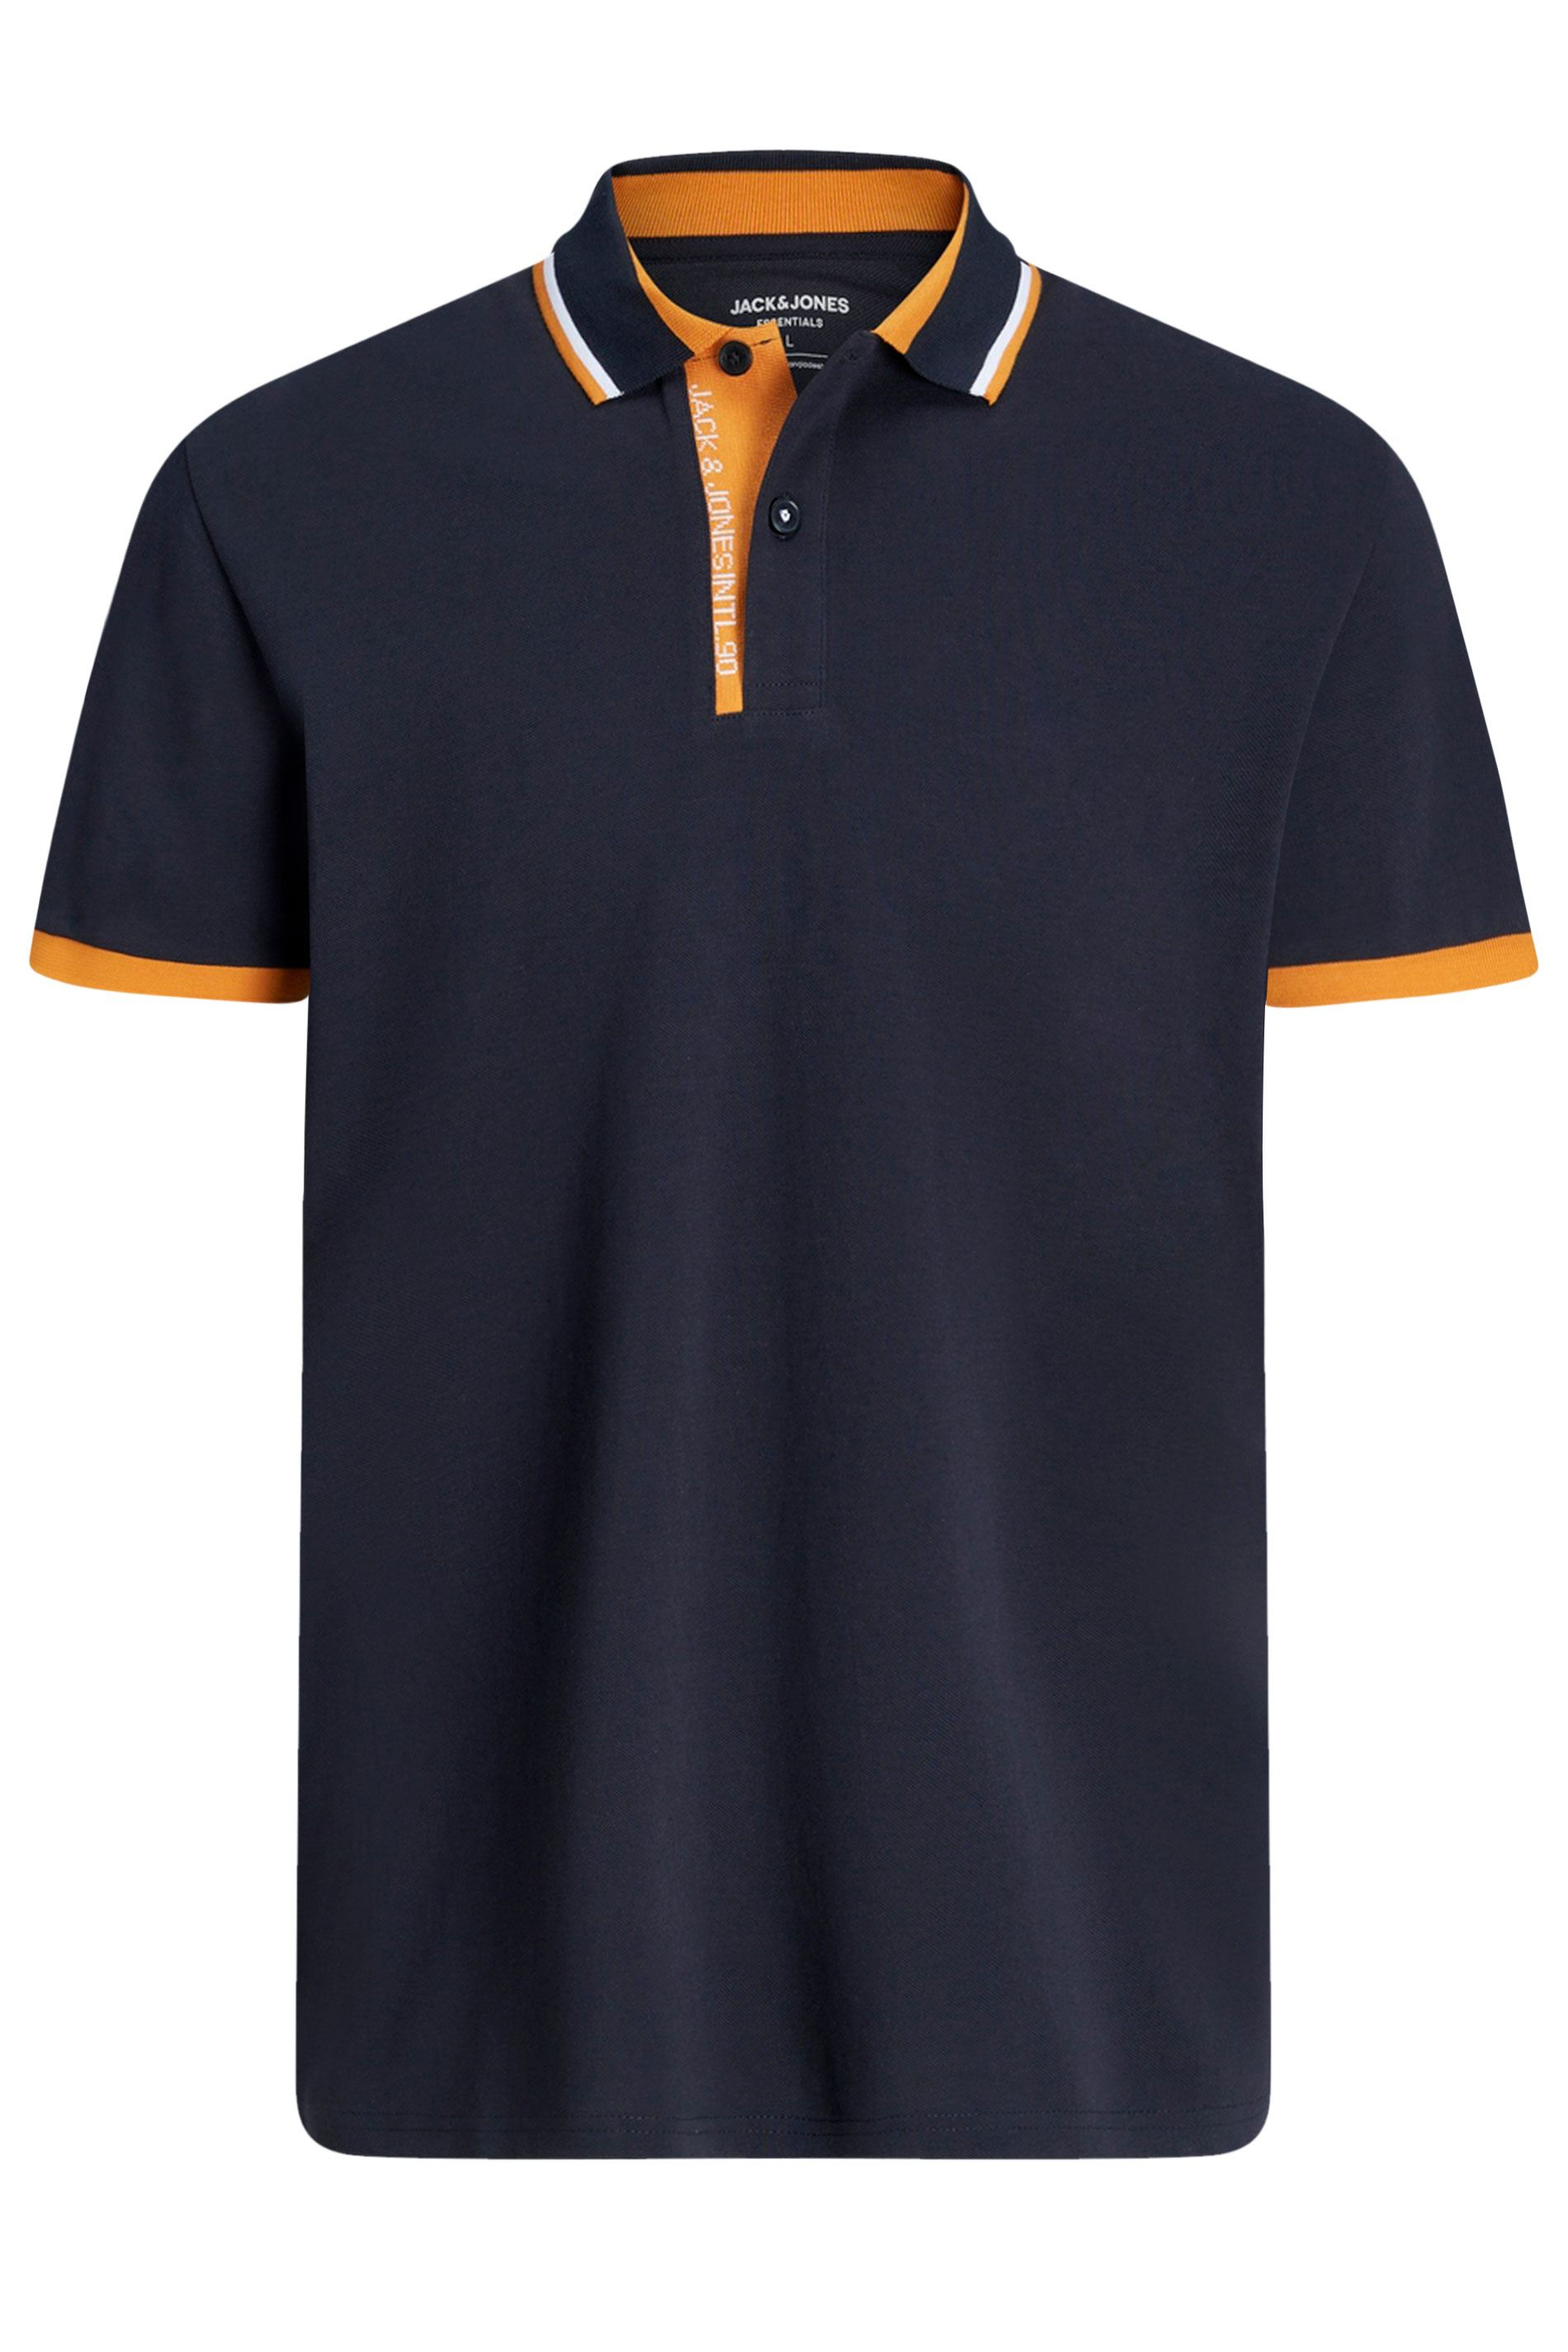 JACK & JONES Big & Tall Navy Blue & Orange Polo Shirt | BadRhino 2